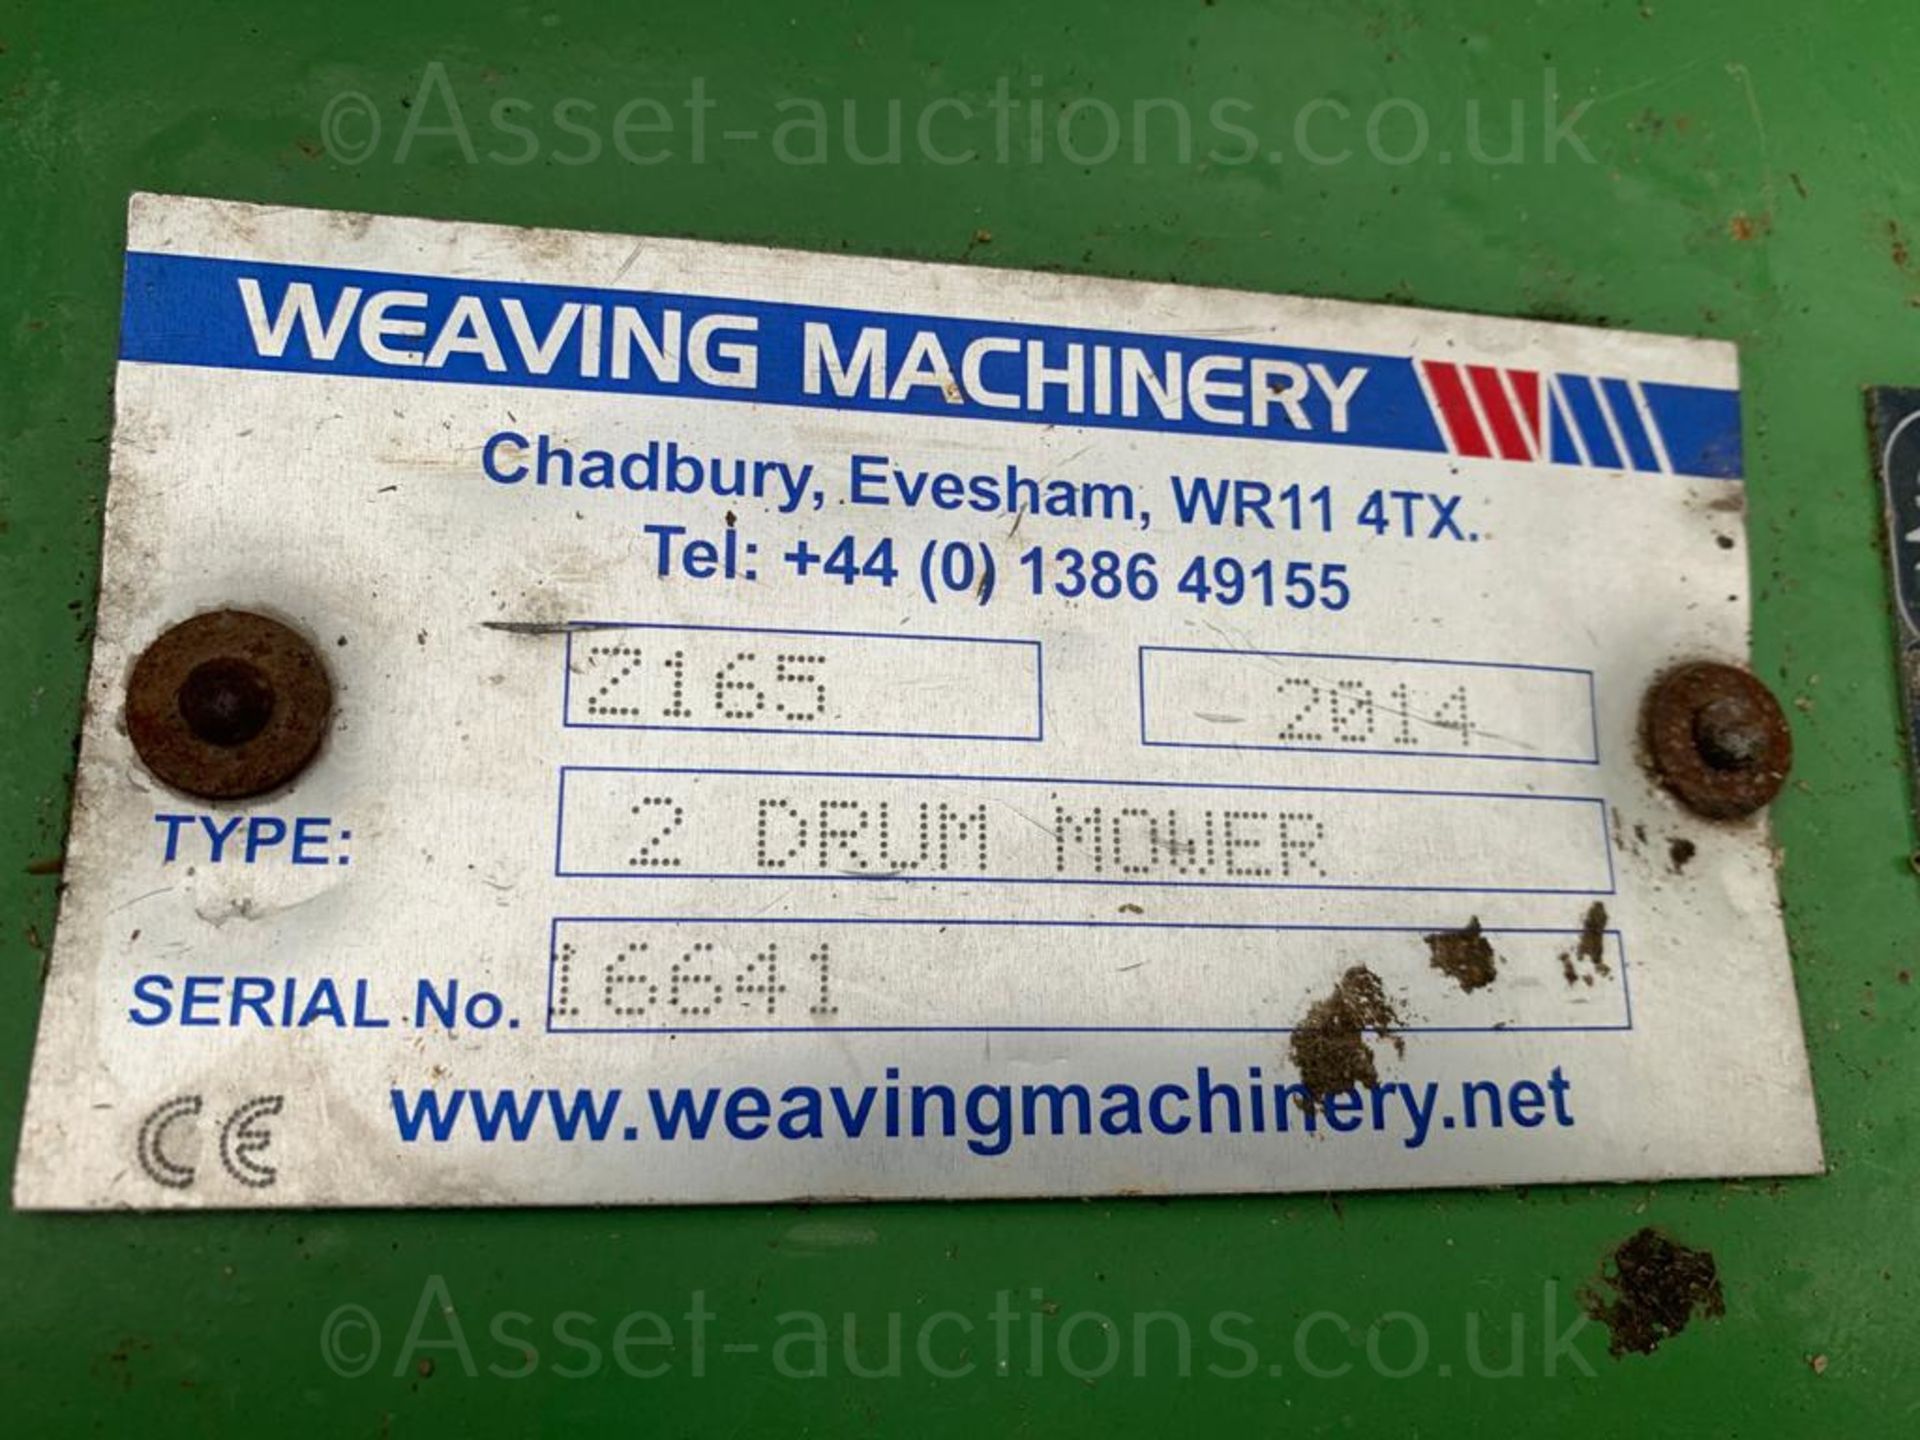 WEAVING MACHINERY 2 DRUM ROTARY MOWER, YEAR 2014, MODEL Z165 - 5'6" CUT WORKING WIDTH *PLUS VAT* - Image 12 of 18